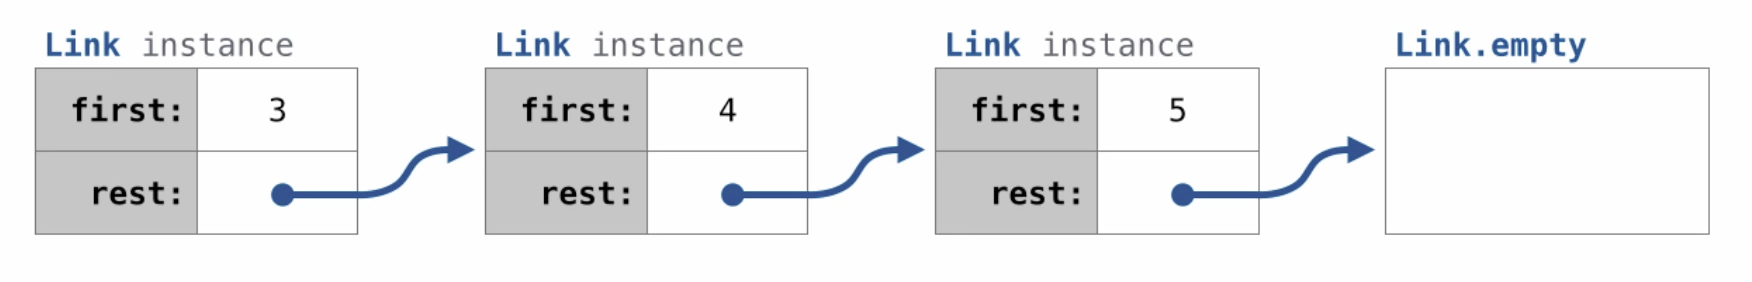 linked list diagram